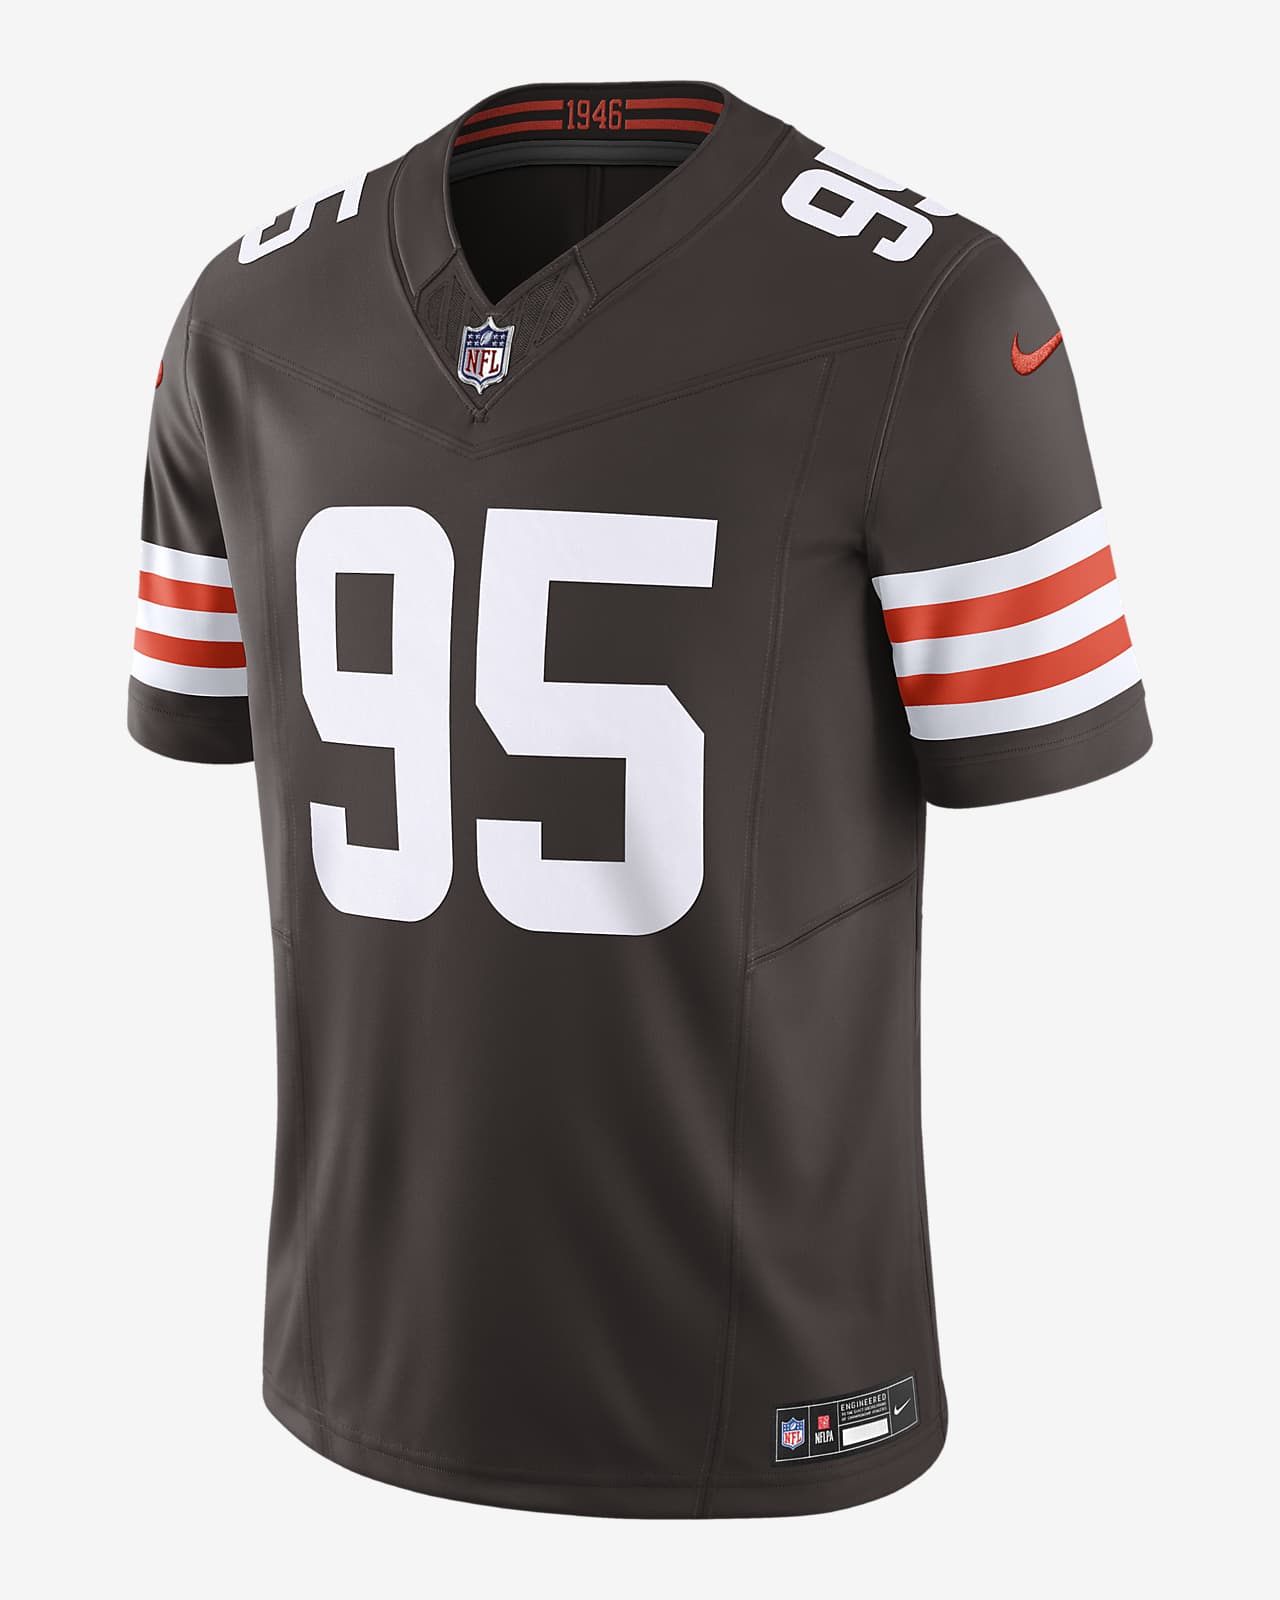 Myles Garrett Cleveland Browns Men's Nike Dri-FIT NFL Limited Football Jersey